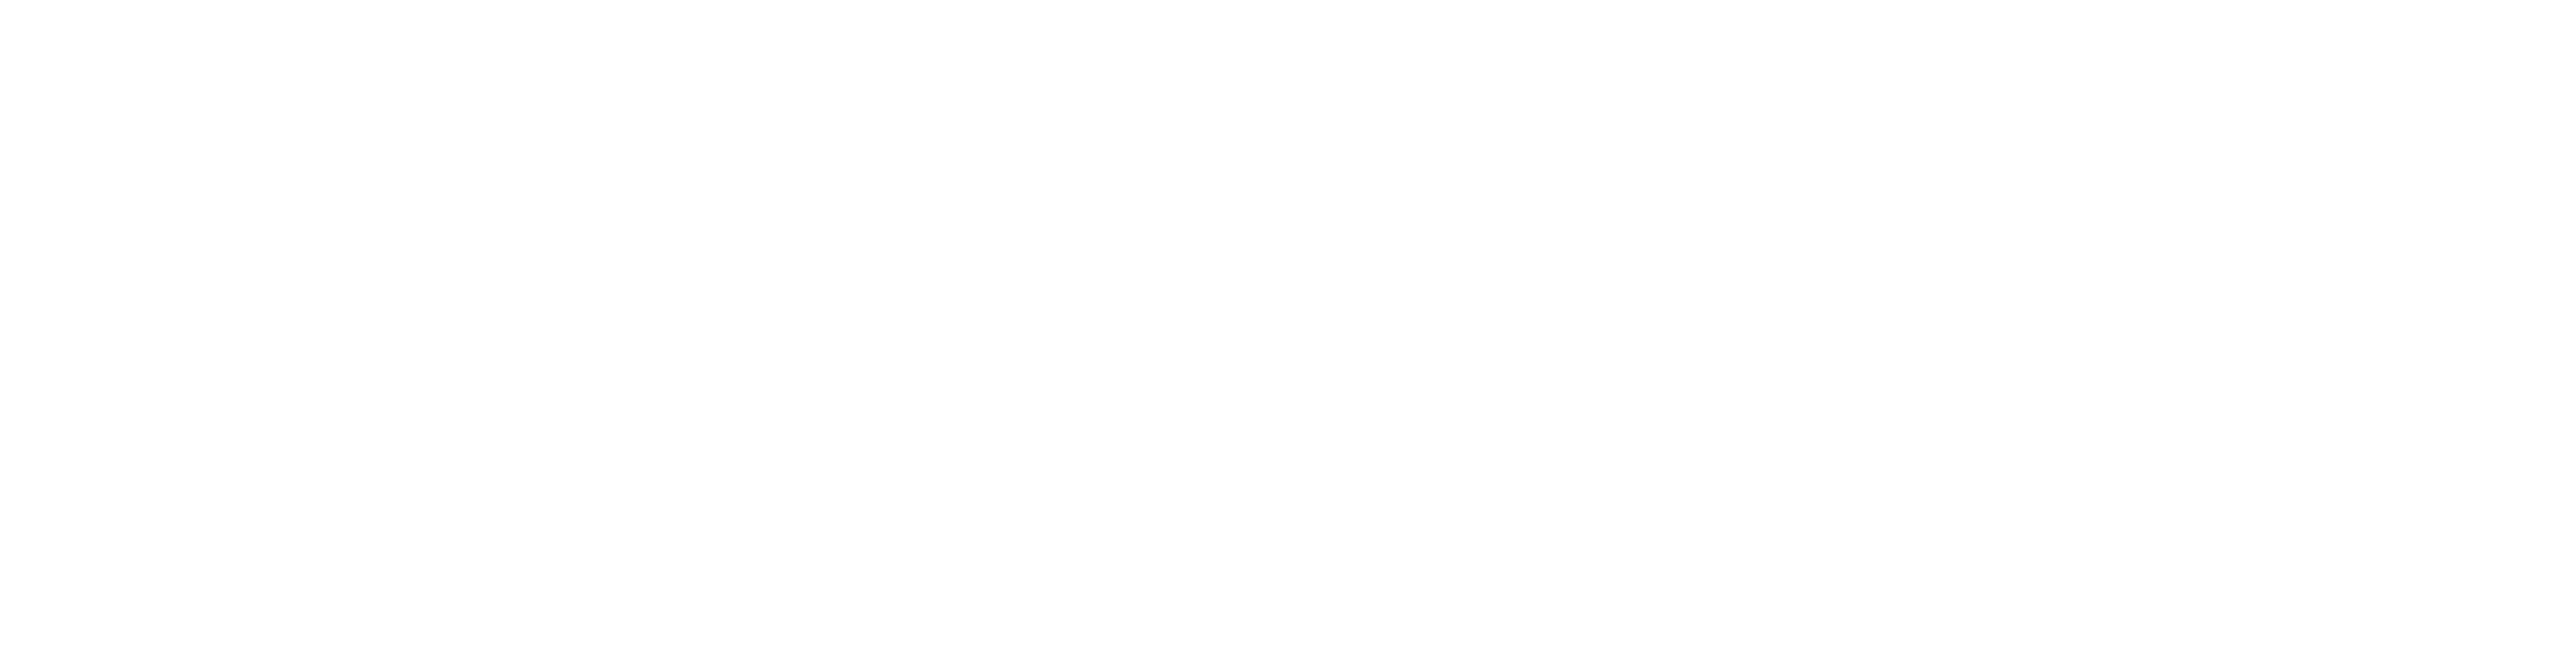 VERTX Remote Logo